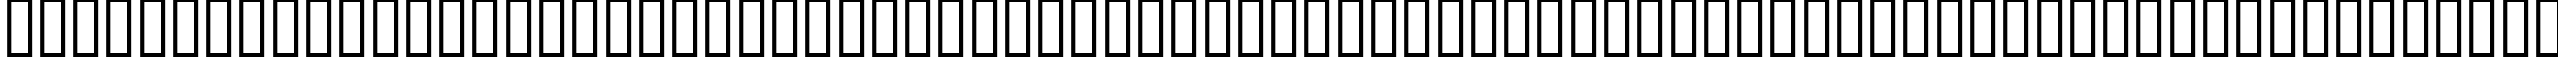 Пример написания английского алфавита шрифтом Maximillion